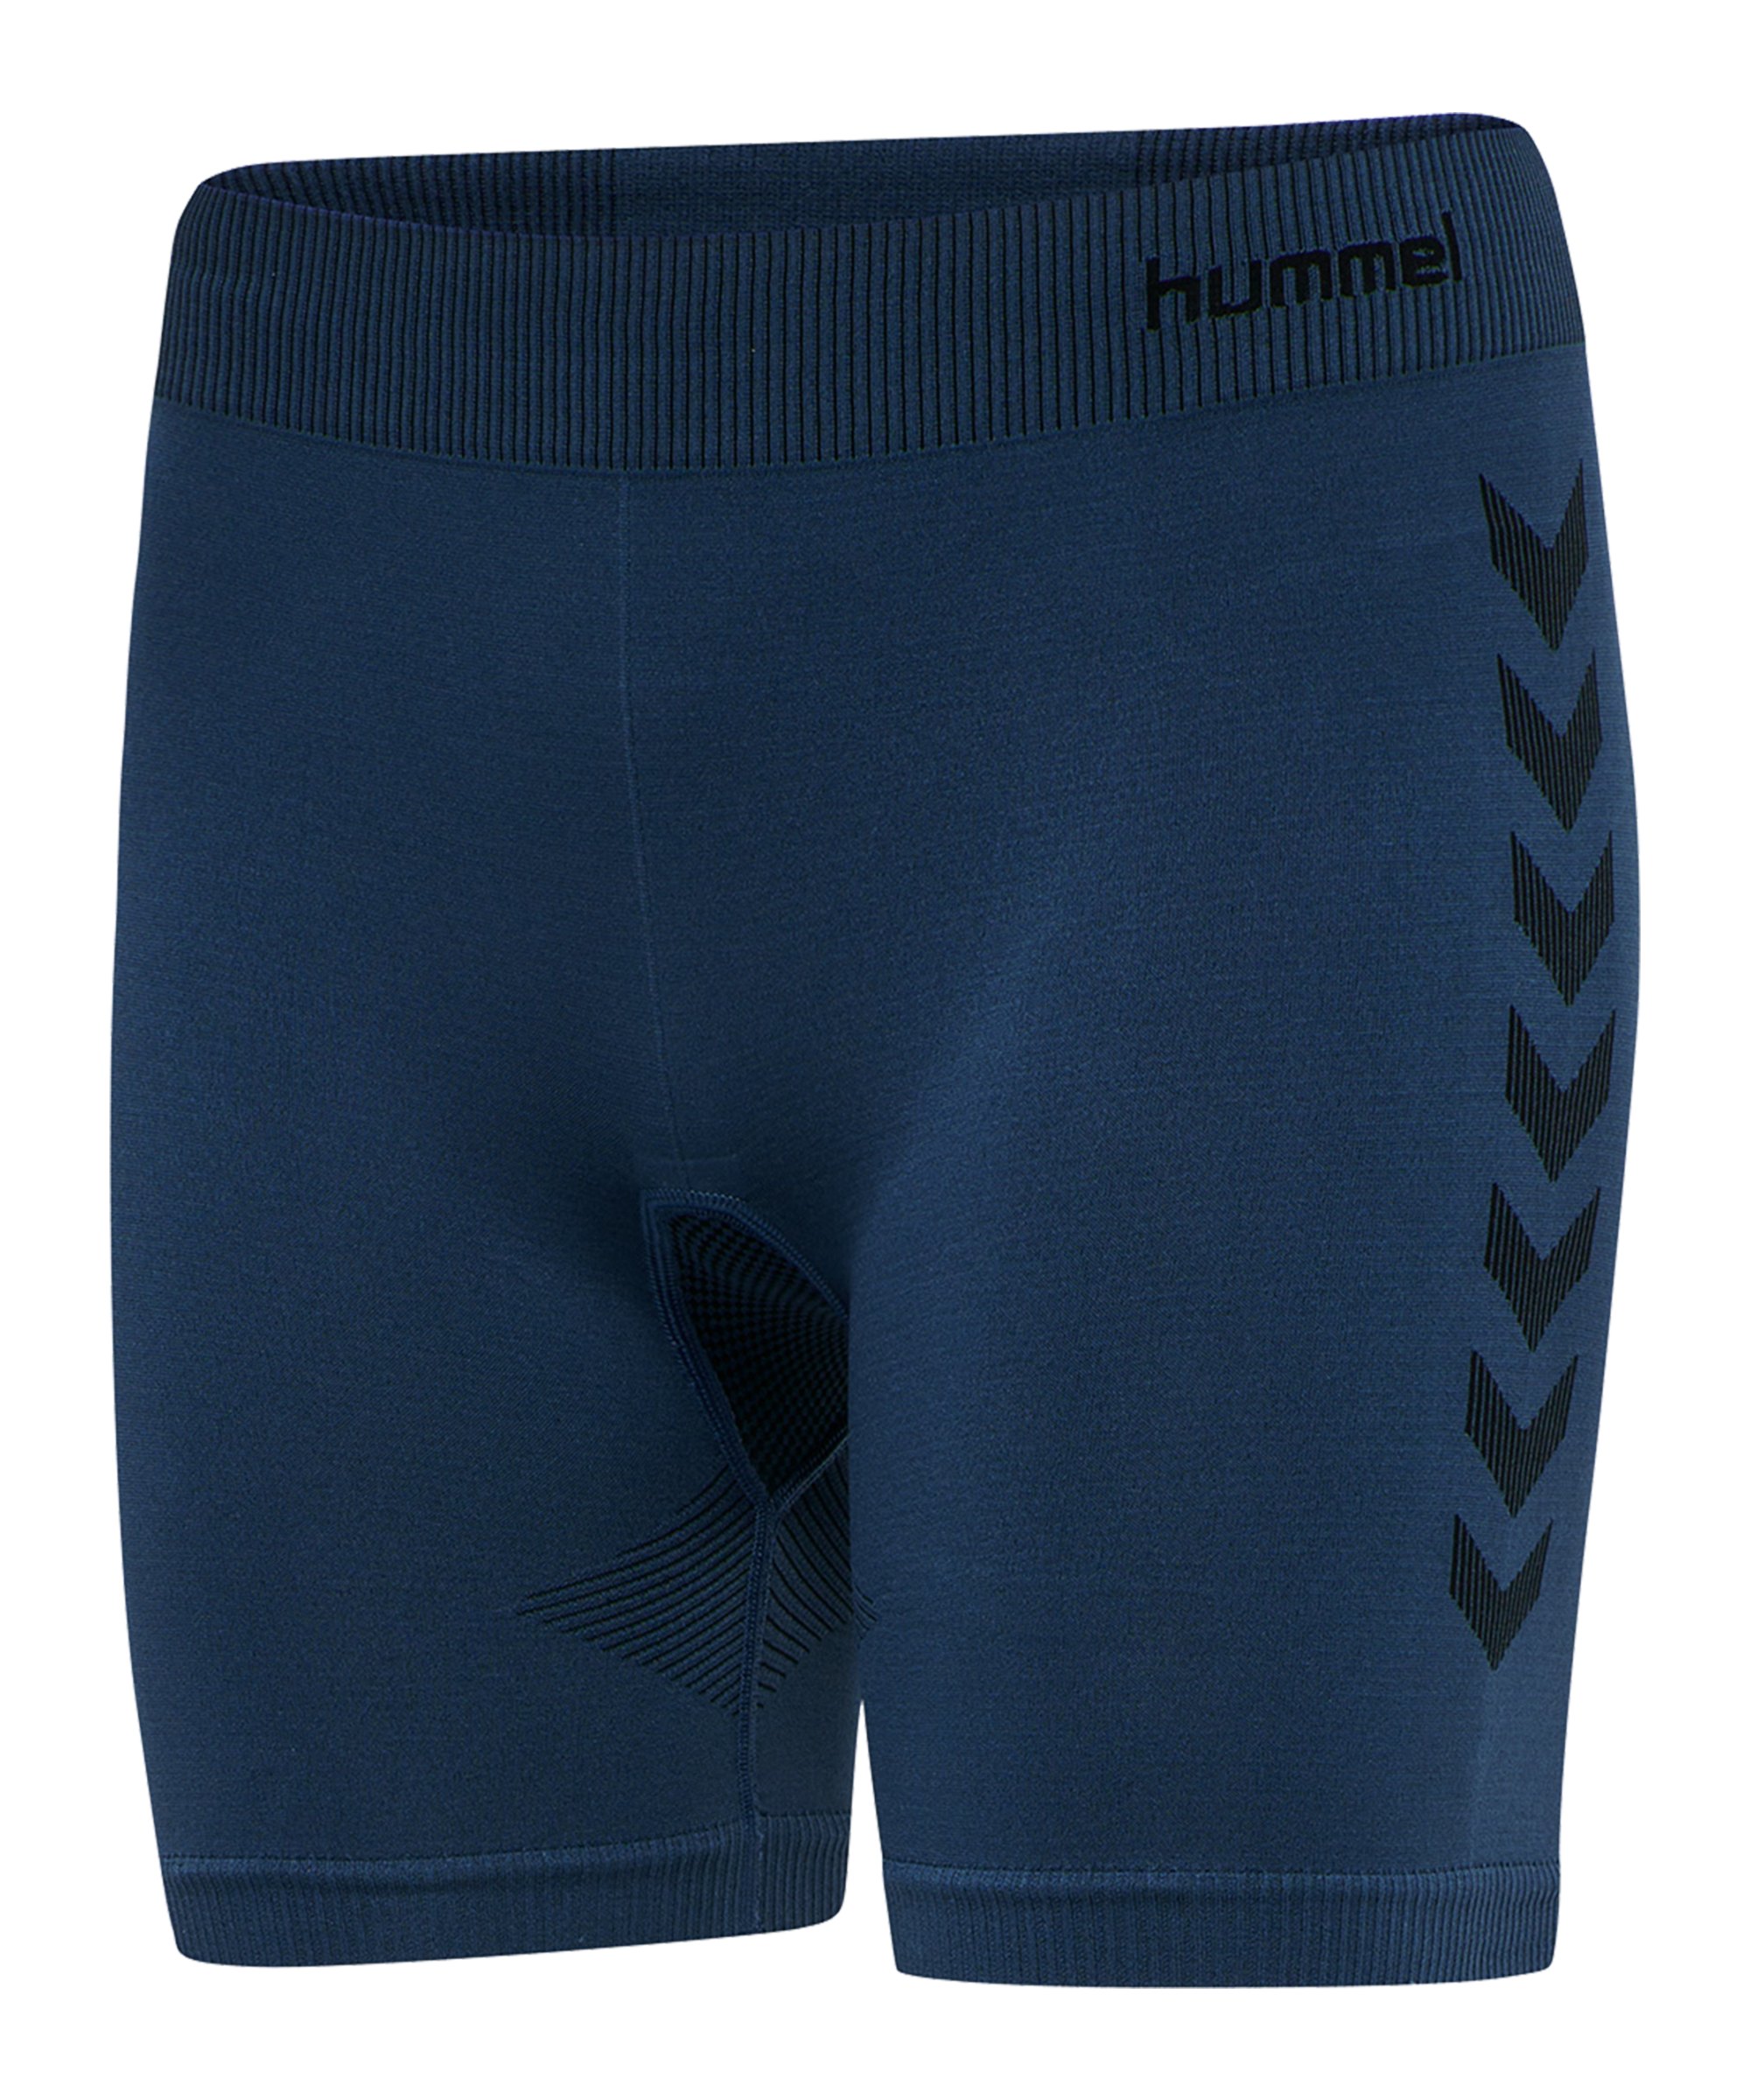 Hummel hmlFIRST Seamless Short Damen Blau F7642 - blau